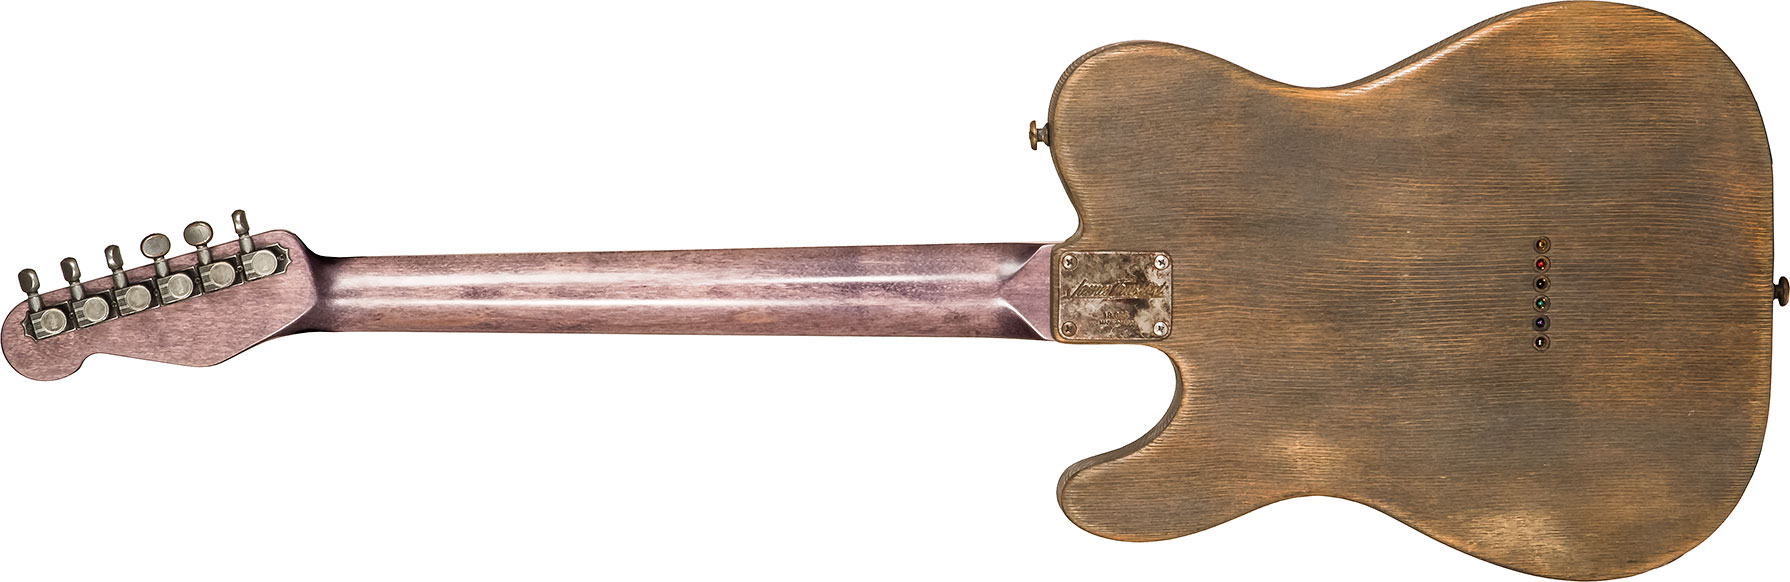 James Trussart Steelguard Caster Sugar Pine Sh Eb #18035 - Rust O Matic Gator Grey Driftwood - Guitarra eléctrica con forma de tel - Variation 1